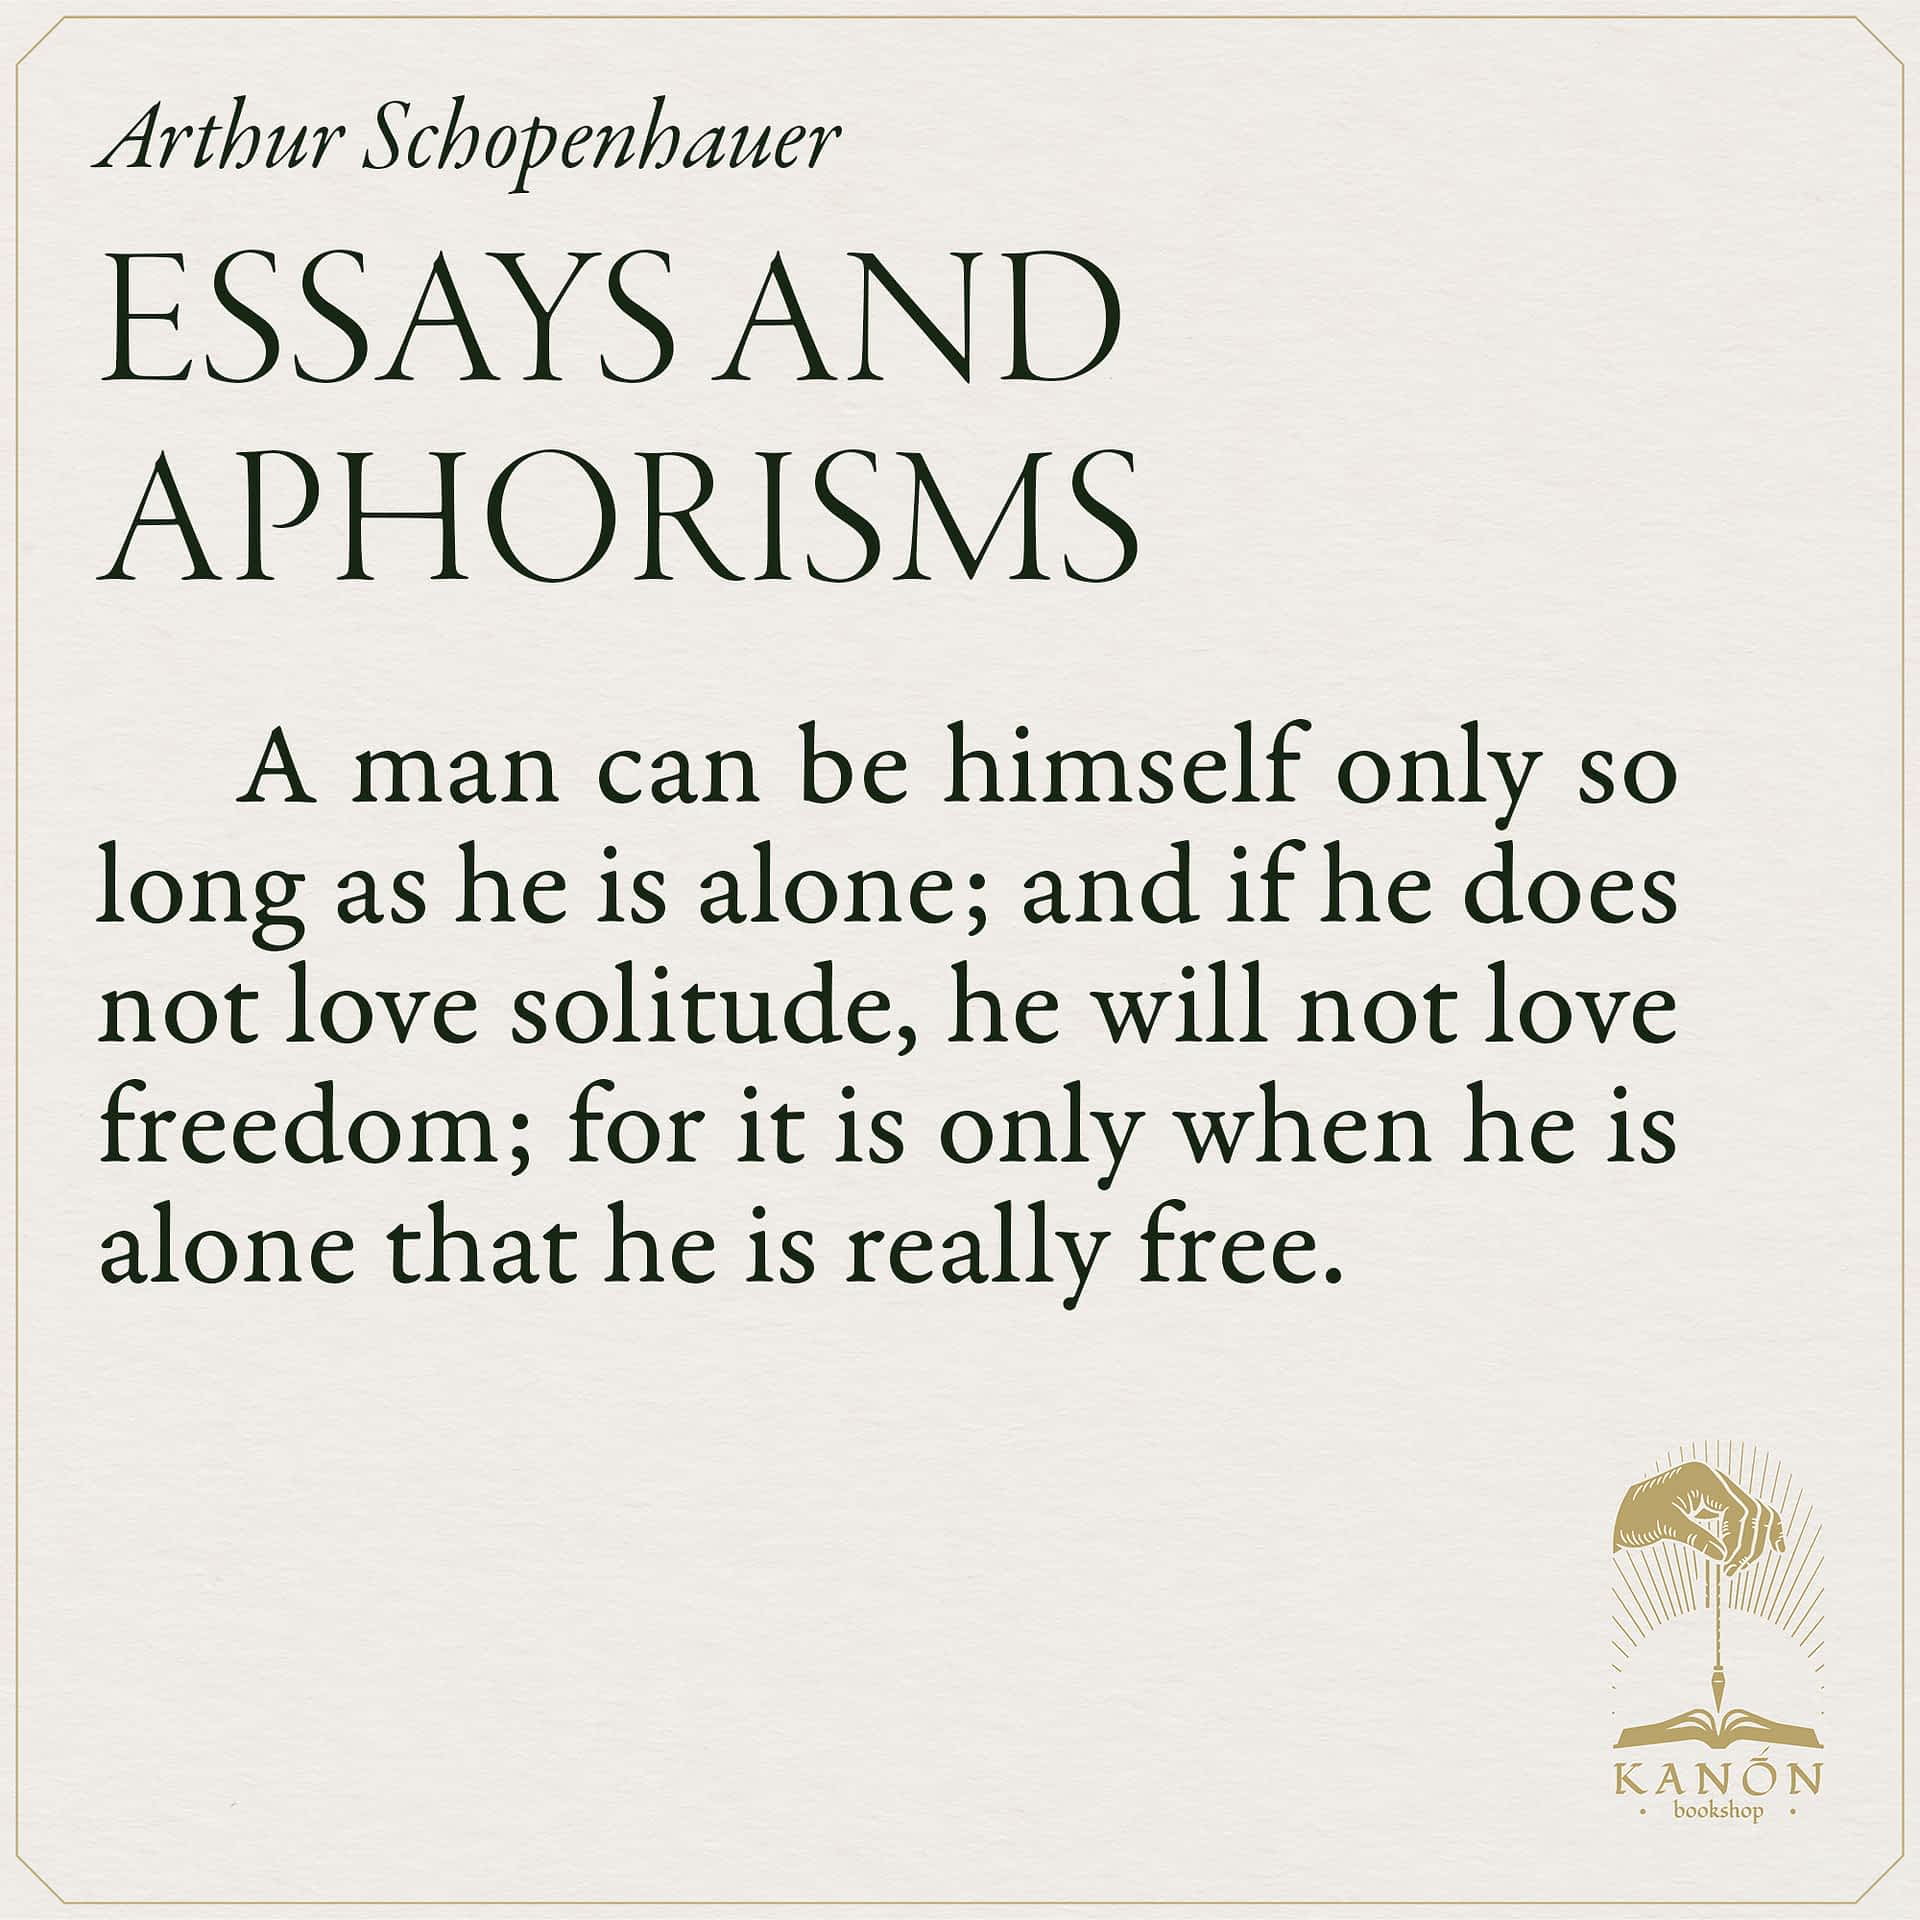 arthur schopenhauer’s essays and aphorisms